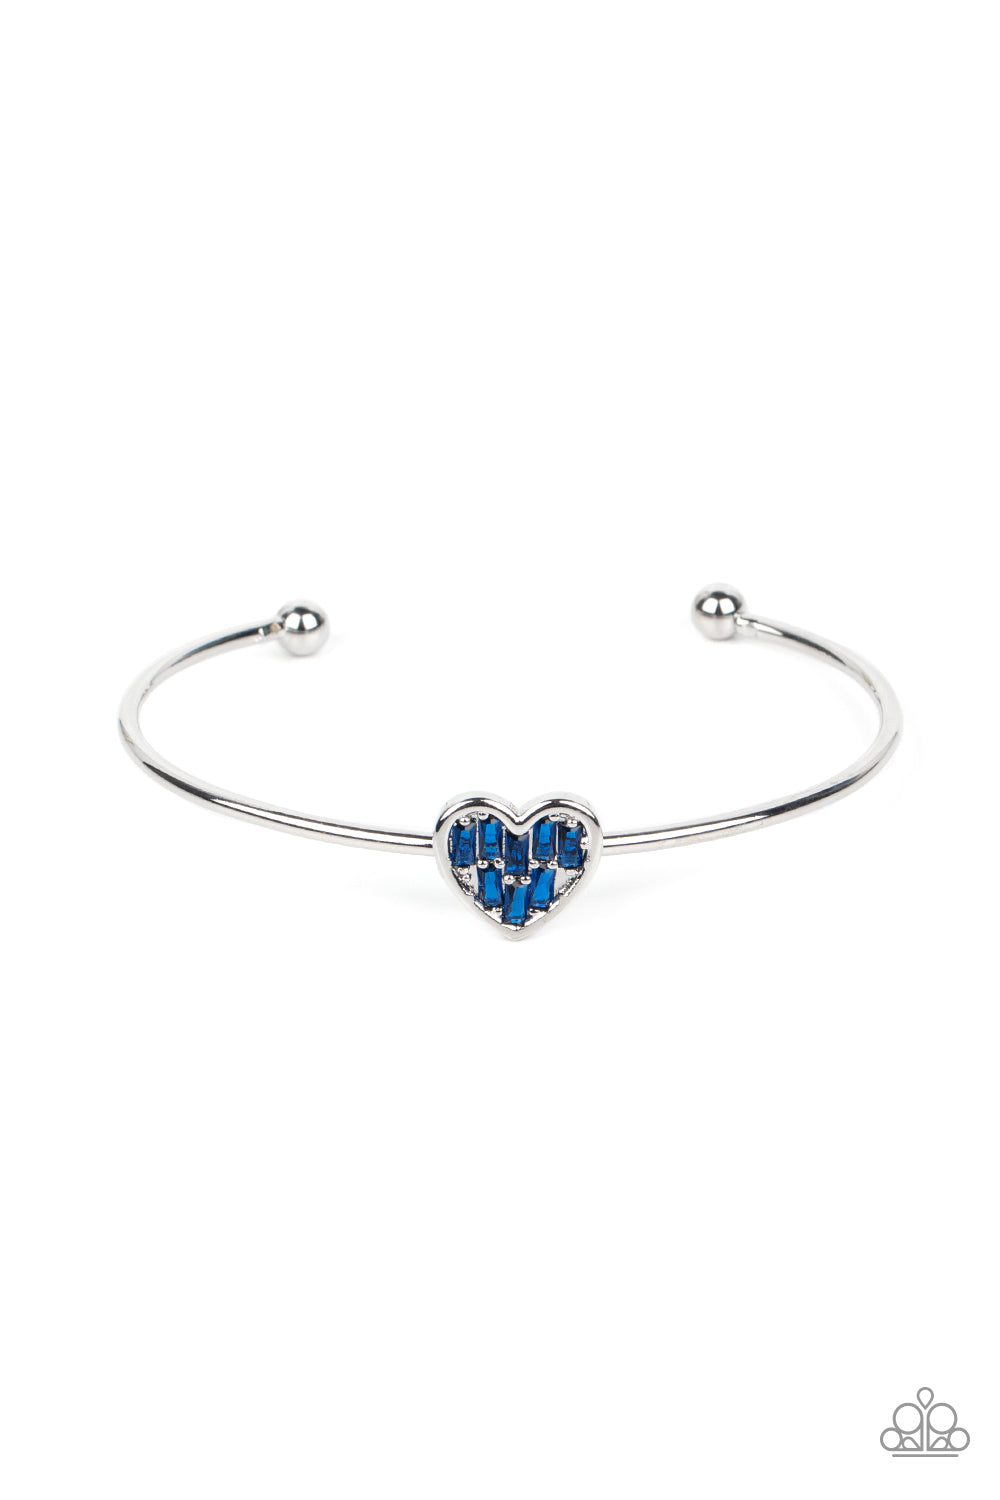 A studded silver heart is encrusted in emerald cut blue rhinestones, creating a flirtatious centerpiece atop a dainty silver cuff.